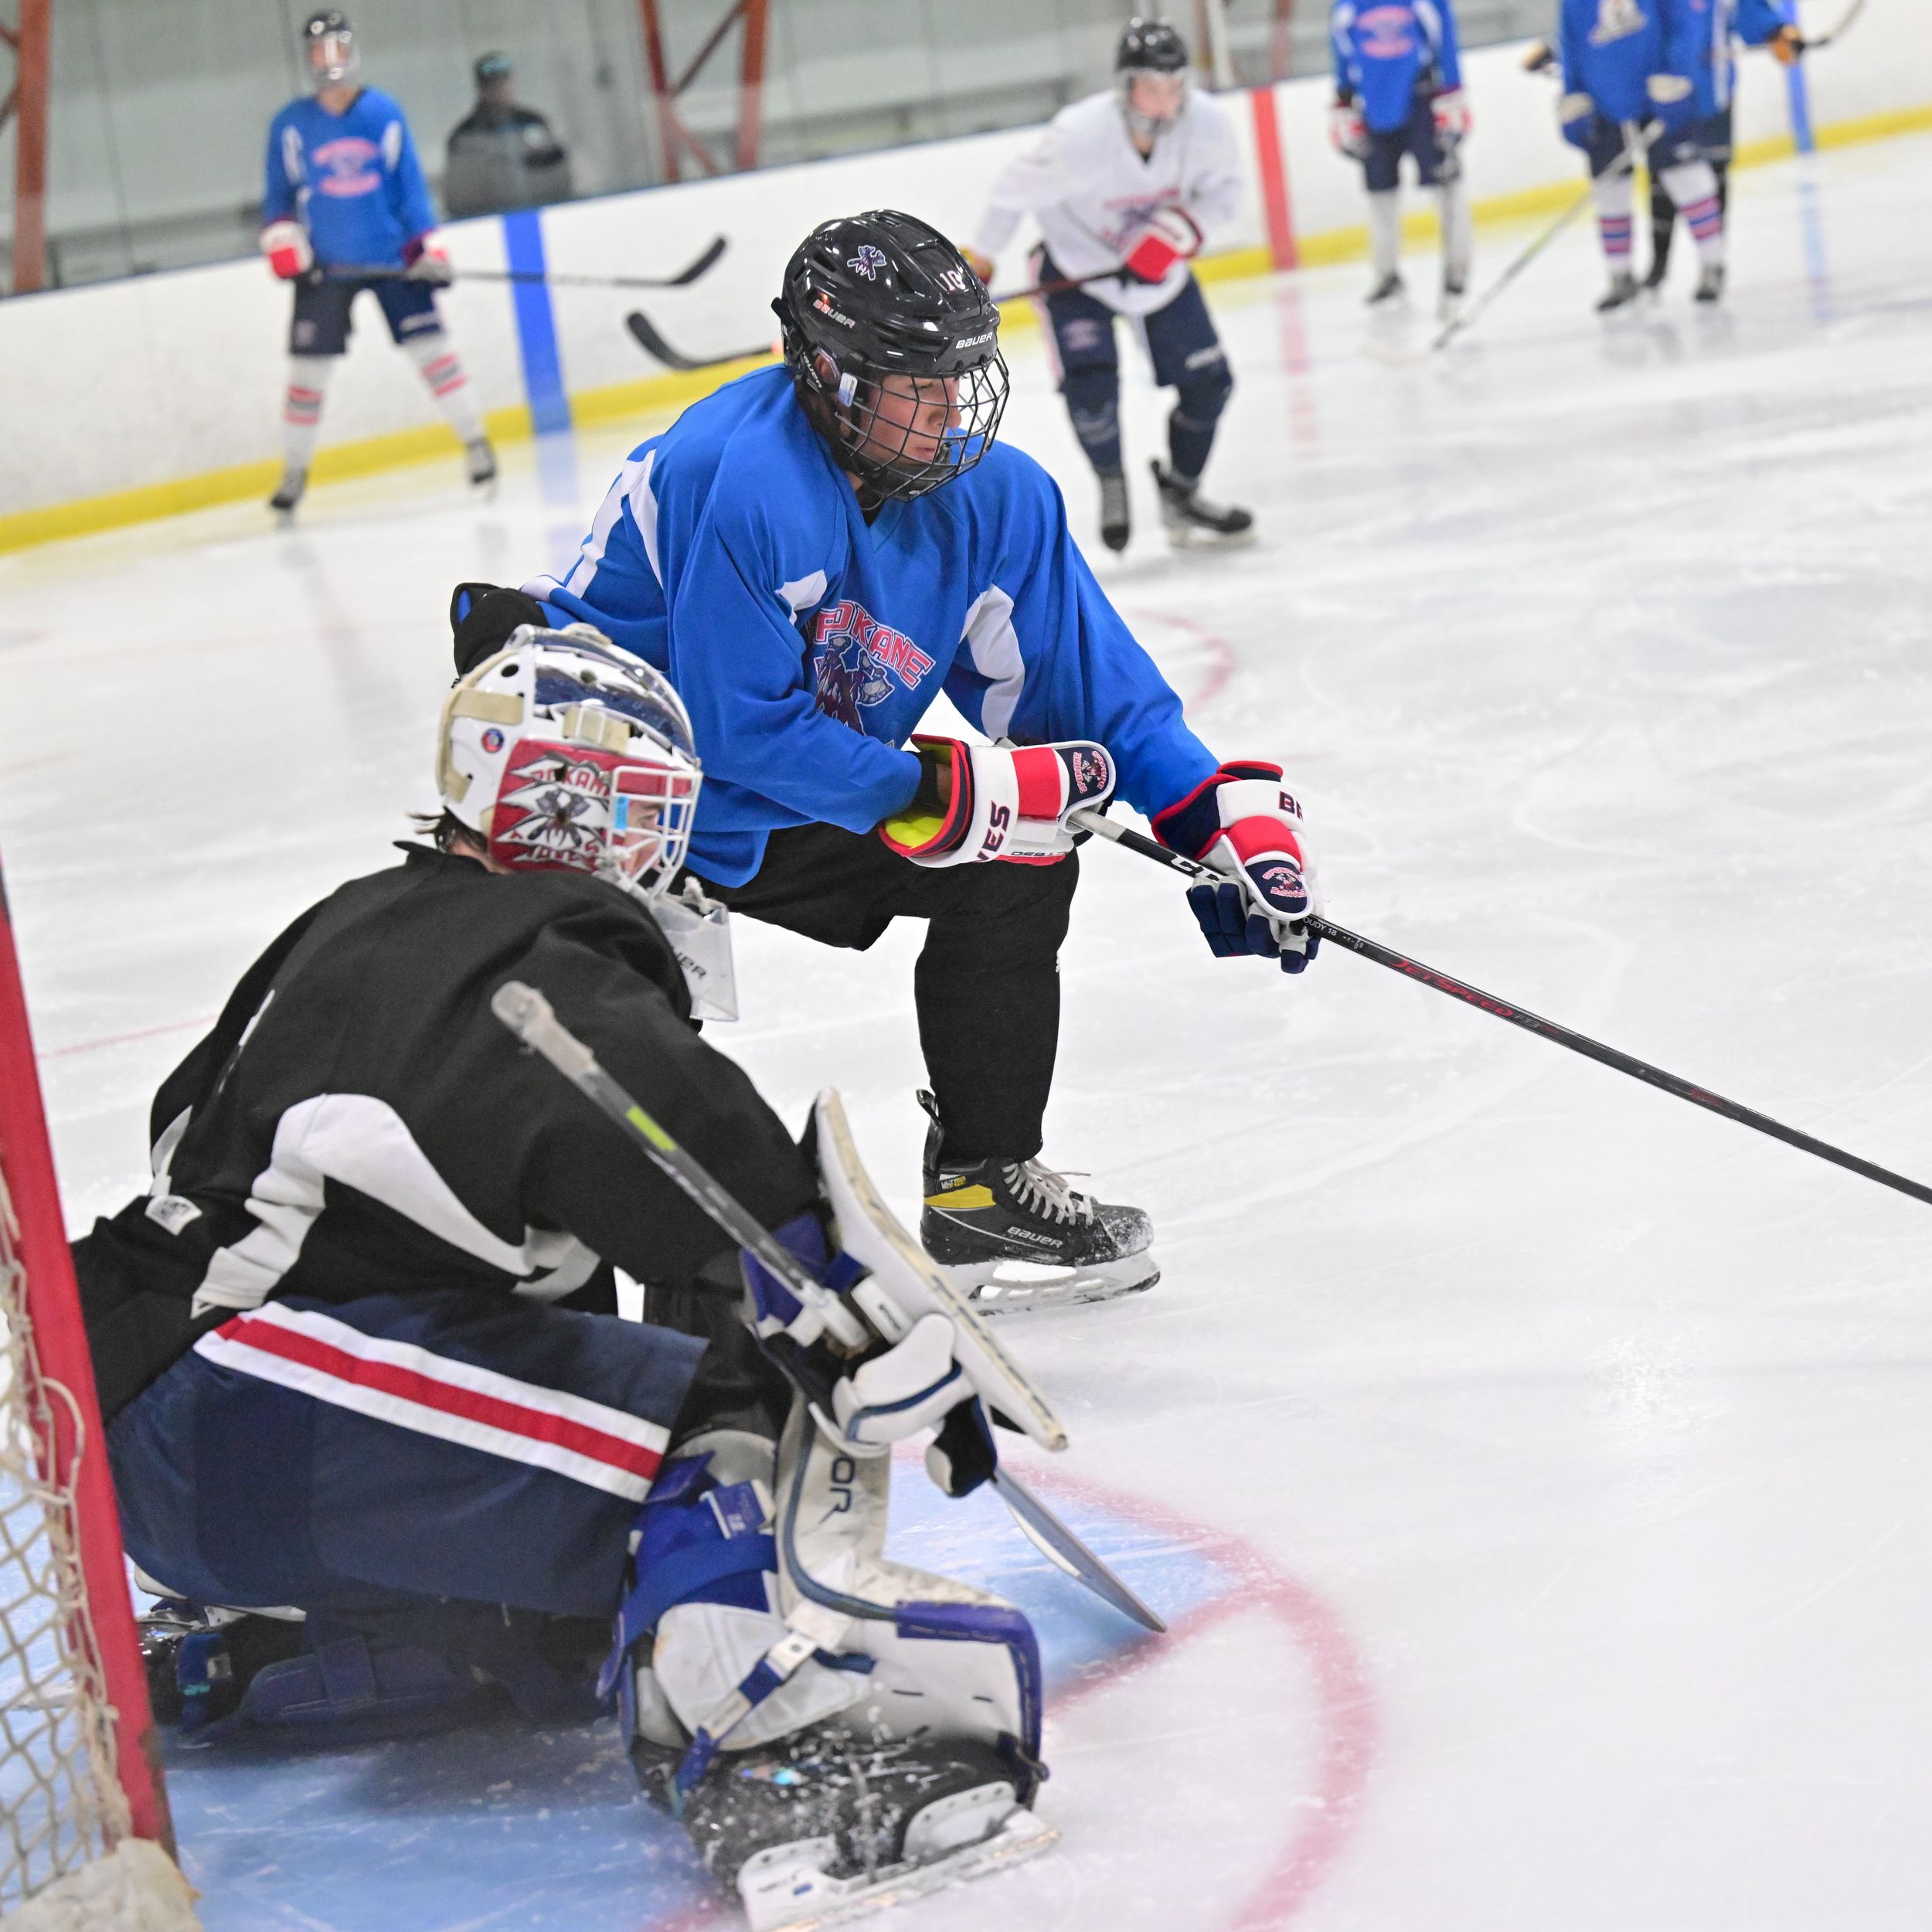 Spokane Braves junior hockey returns to the ice for first season